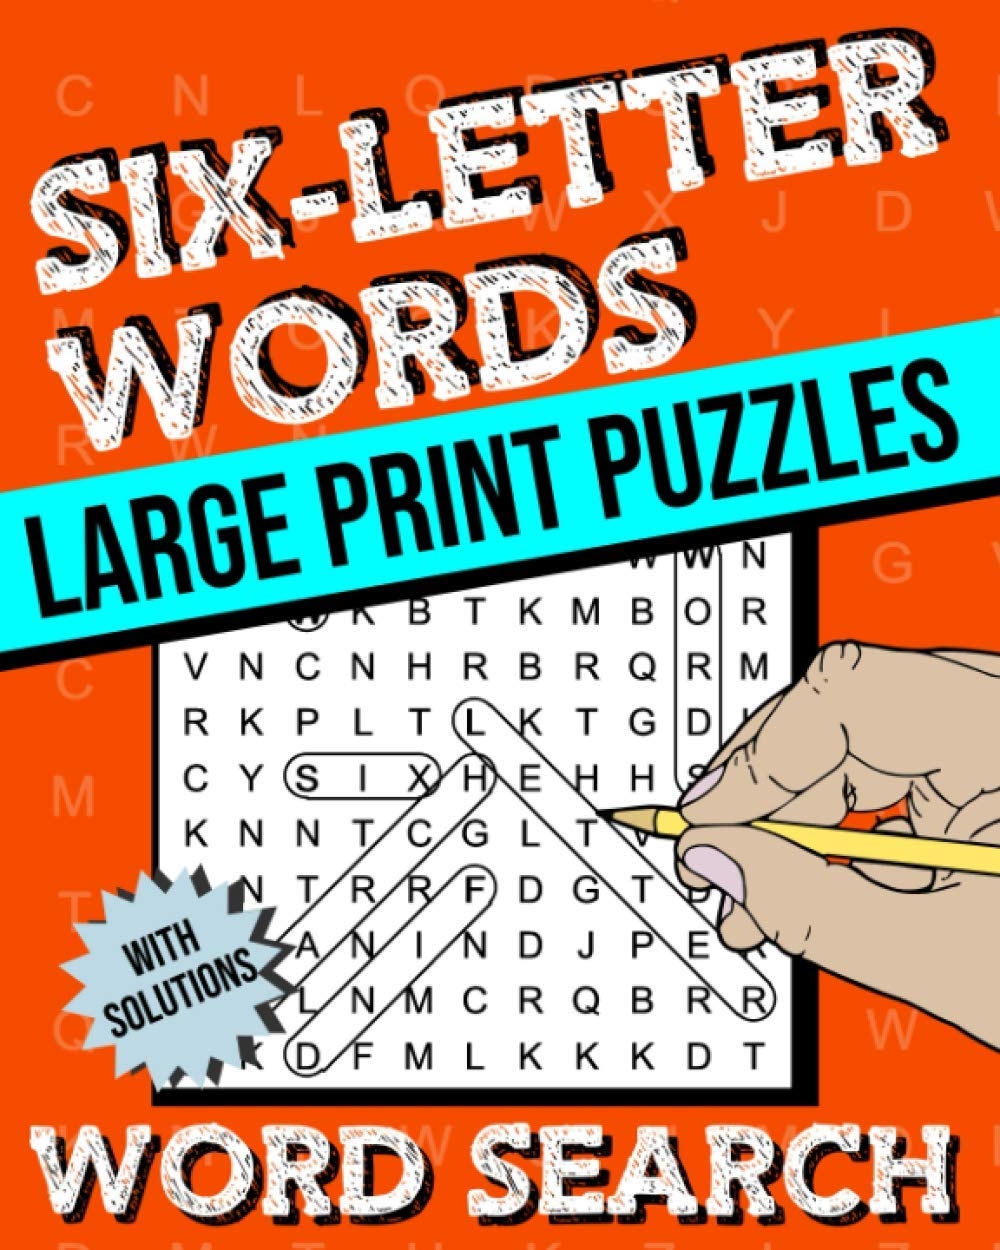 Six Letter Words Word Search Large Print Puzzles Barlow Shane Amazon de Books